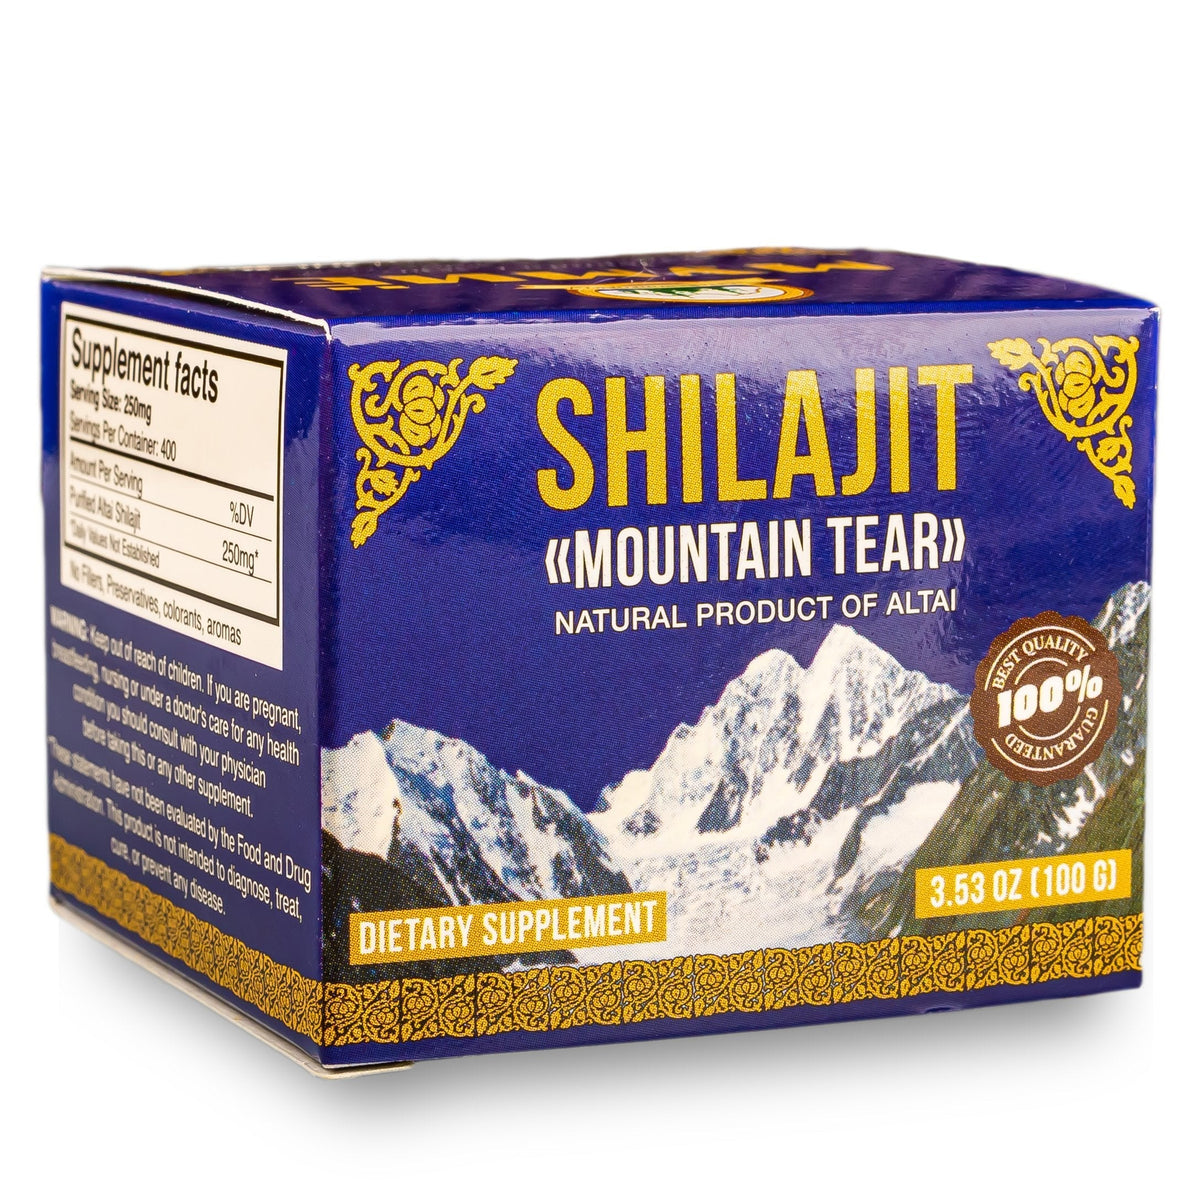 "Mountain Tear" Altai Premium Puro Shilajit Mumijo Resina Siberia 100g (3.4 oz)